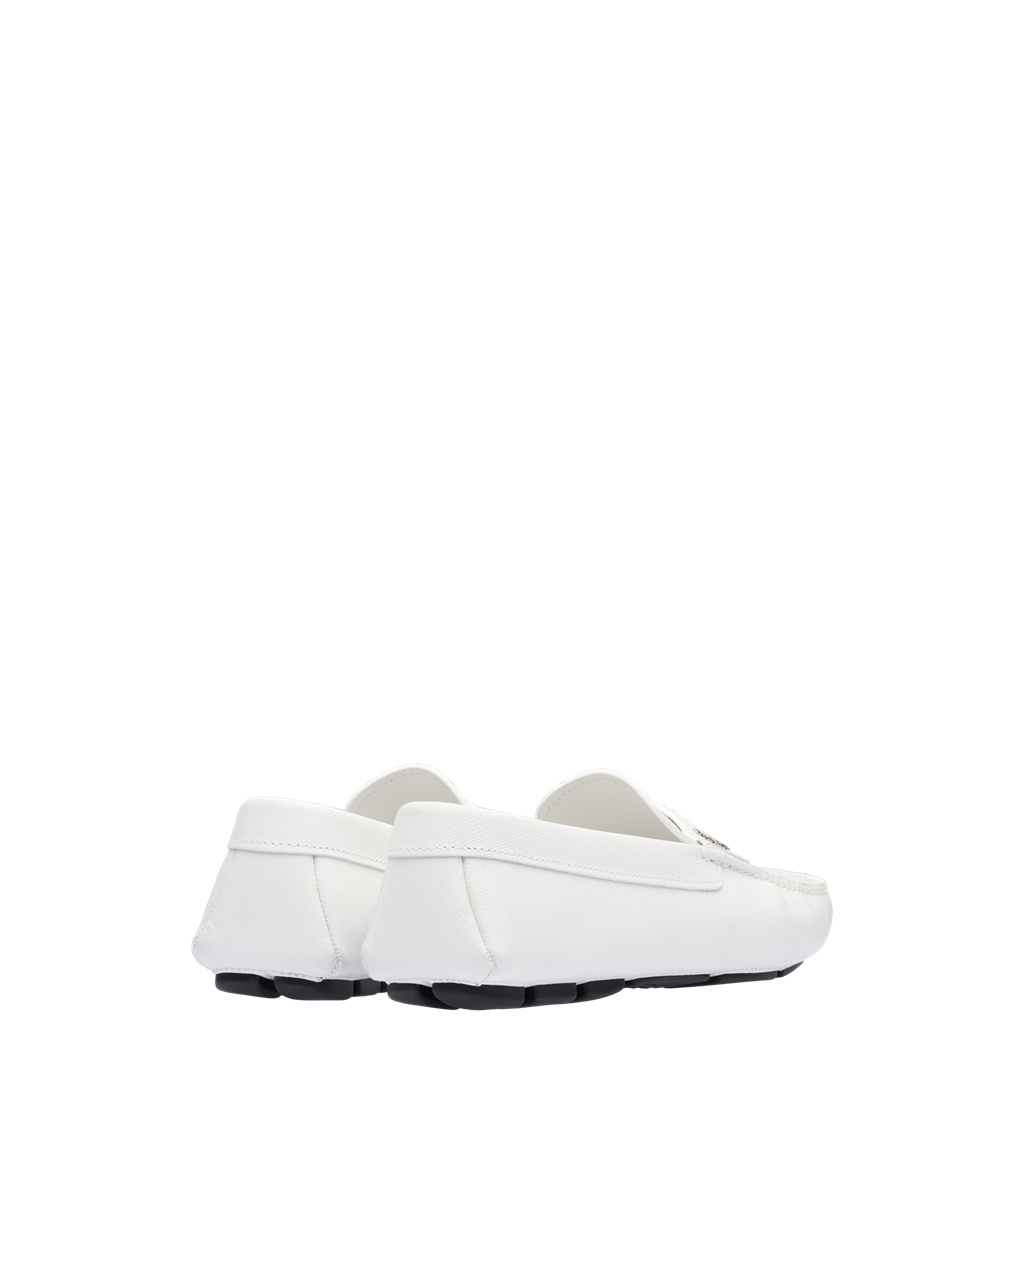 Prada Saffiano Leather Loafers White | 9321TGWAR